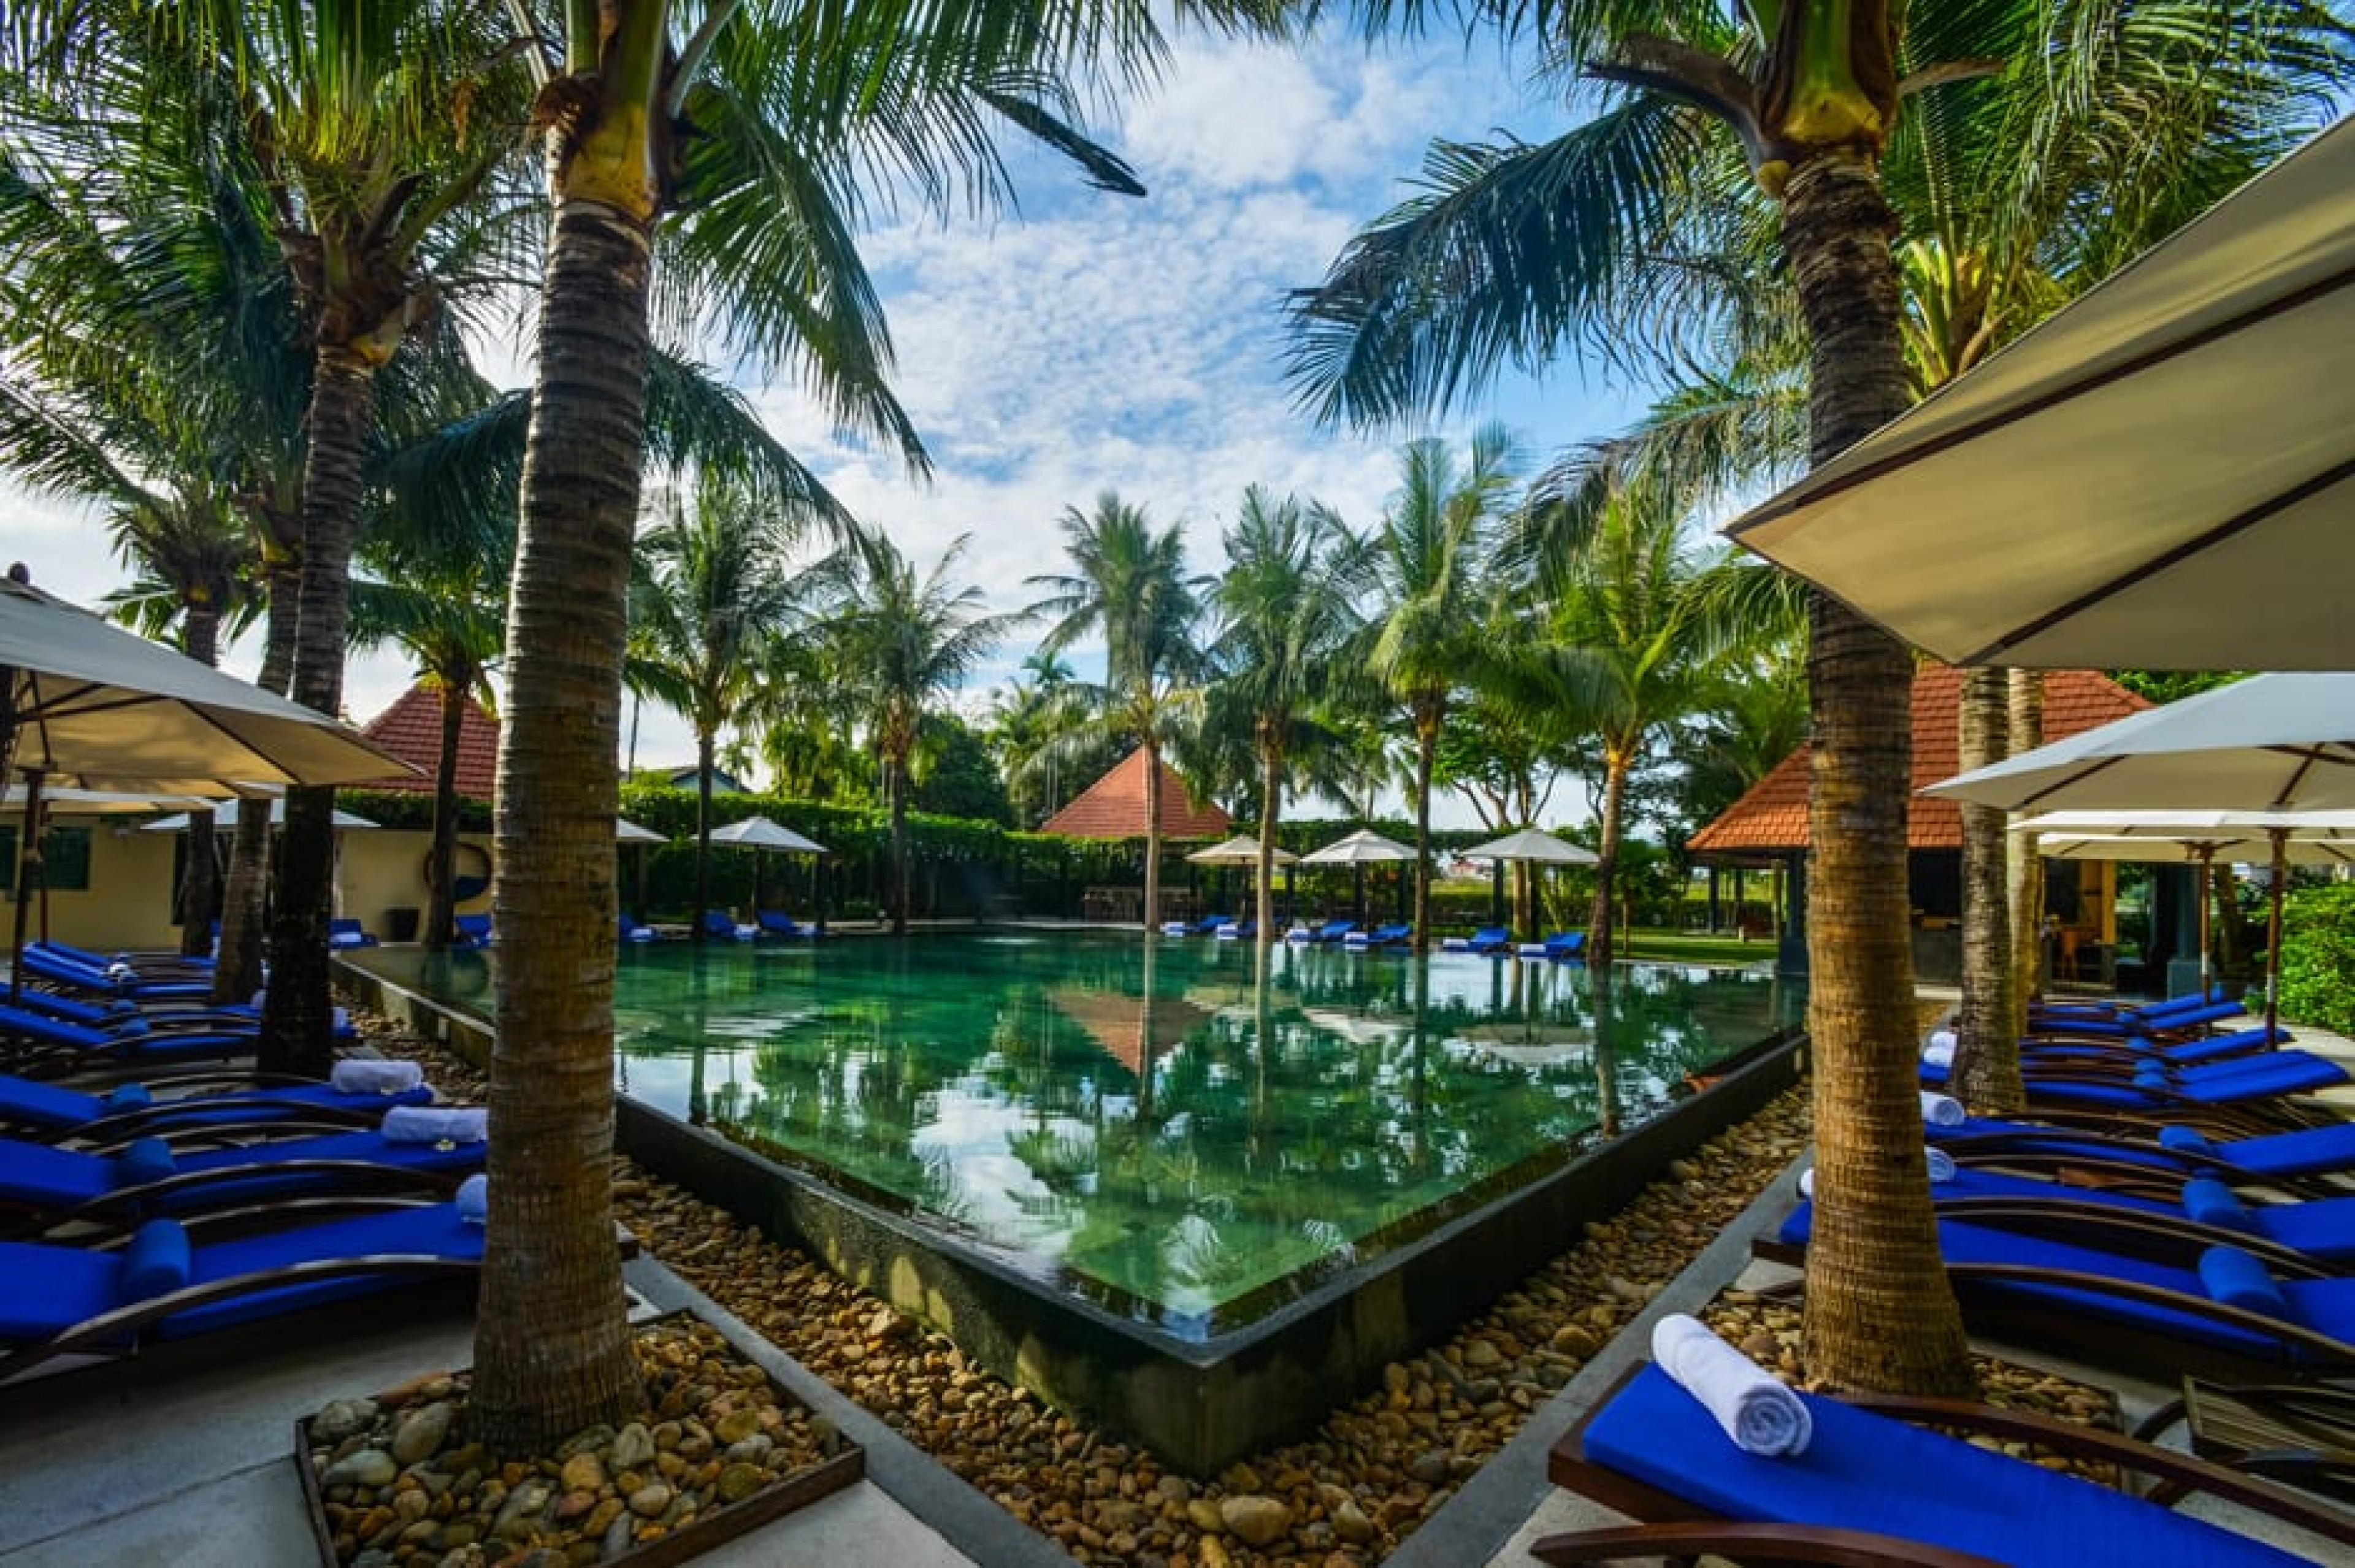 Resort Pool at Anantara, Hoi An, Vietnam